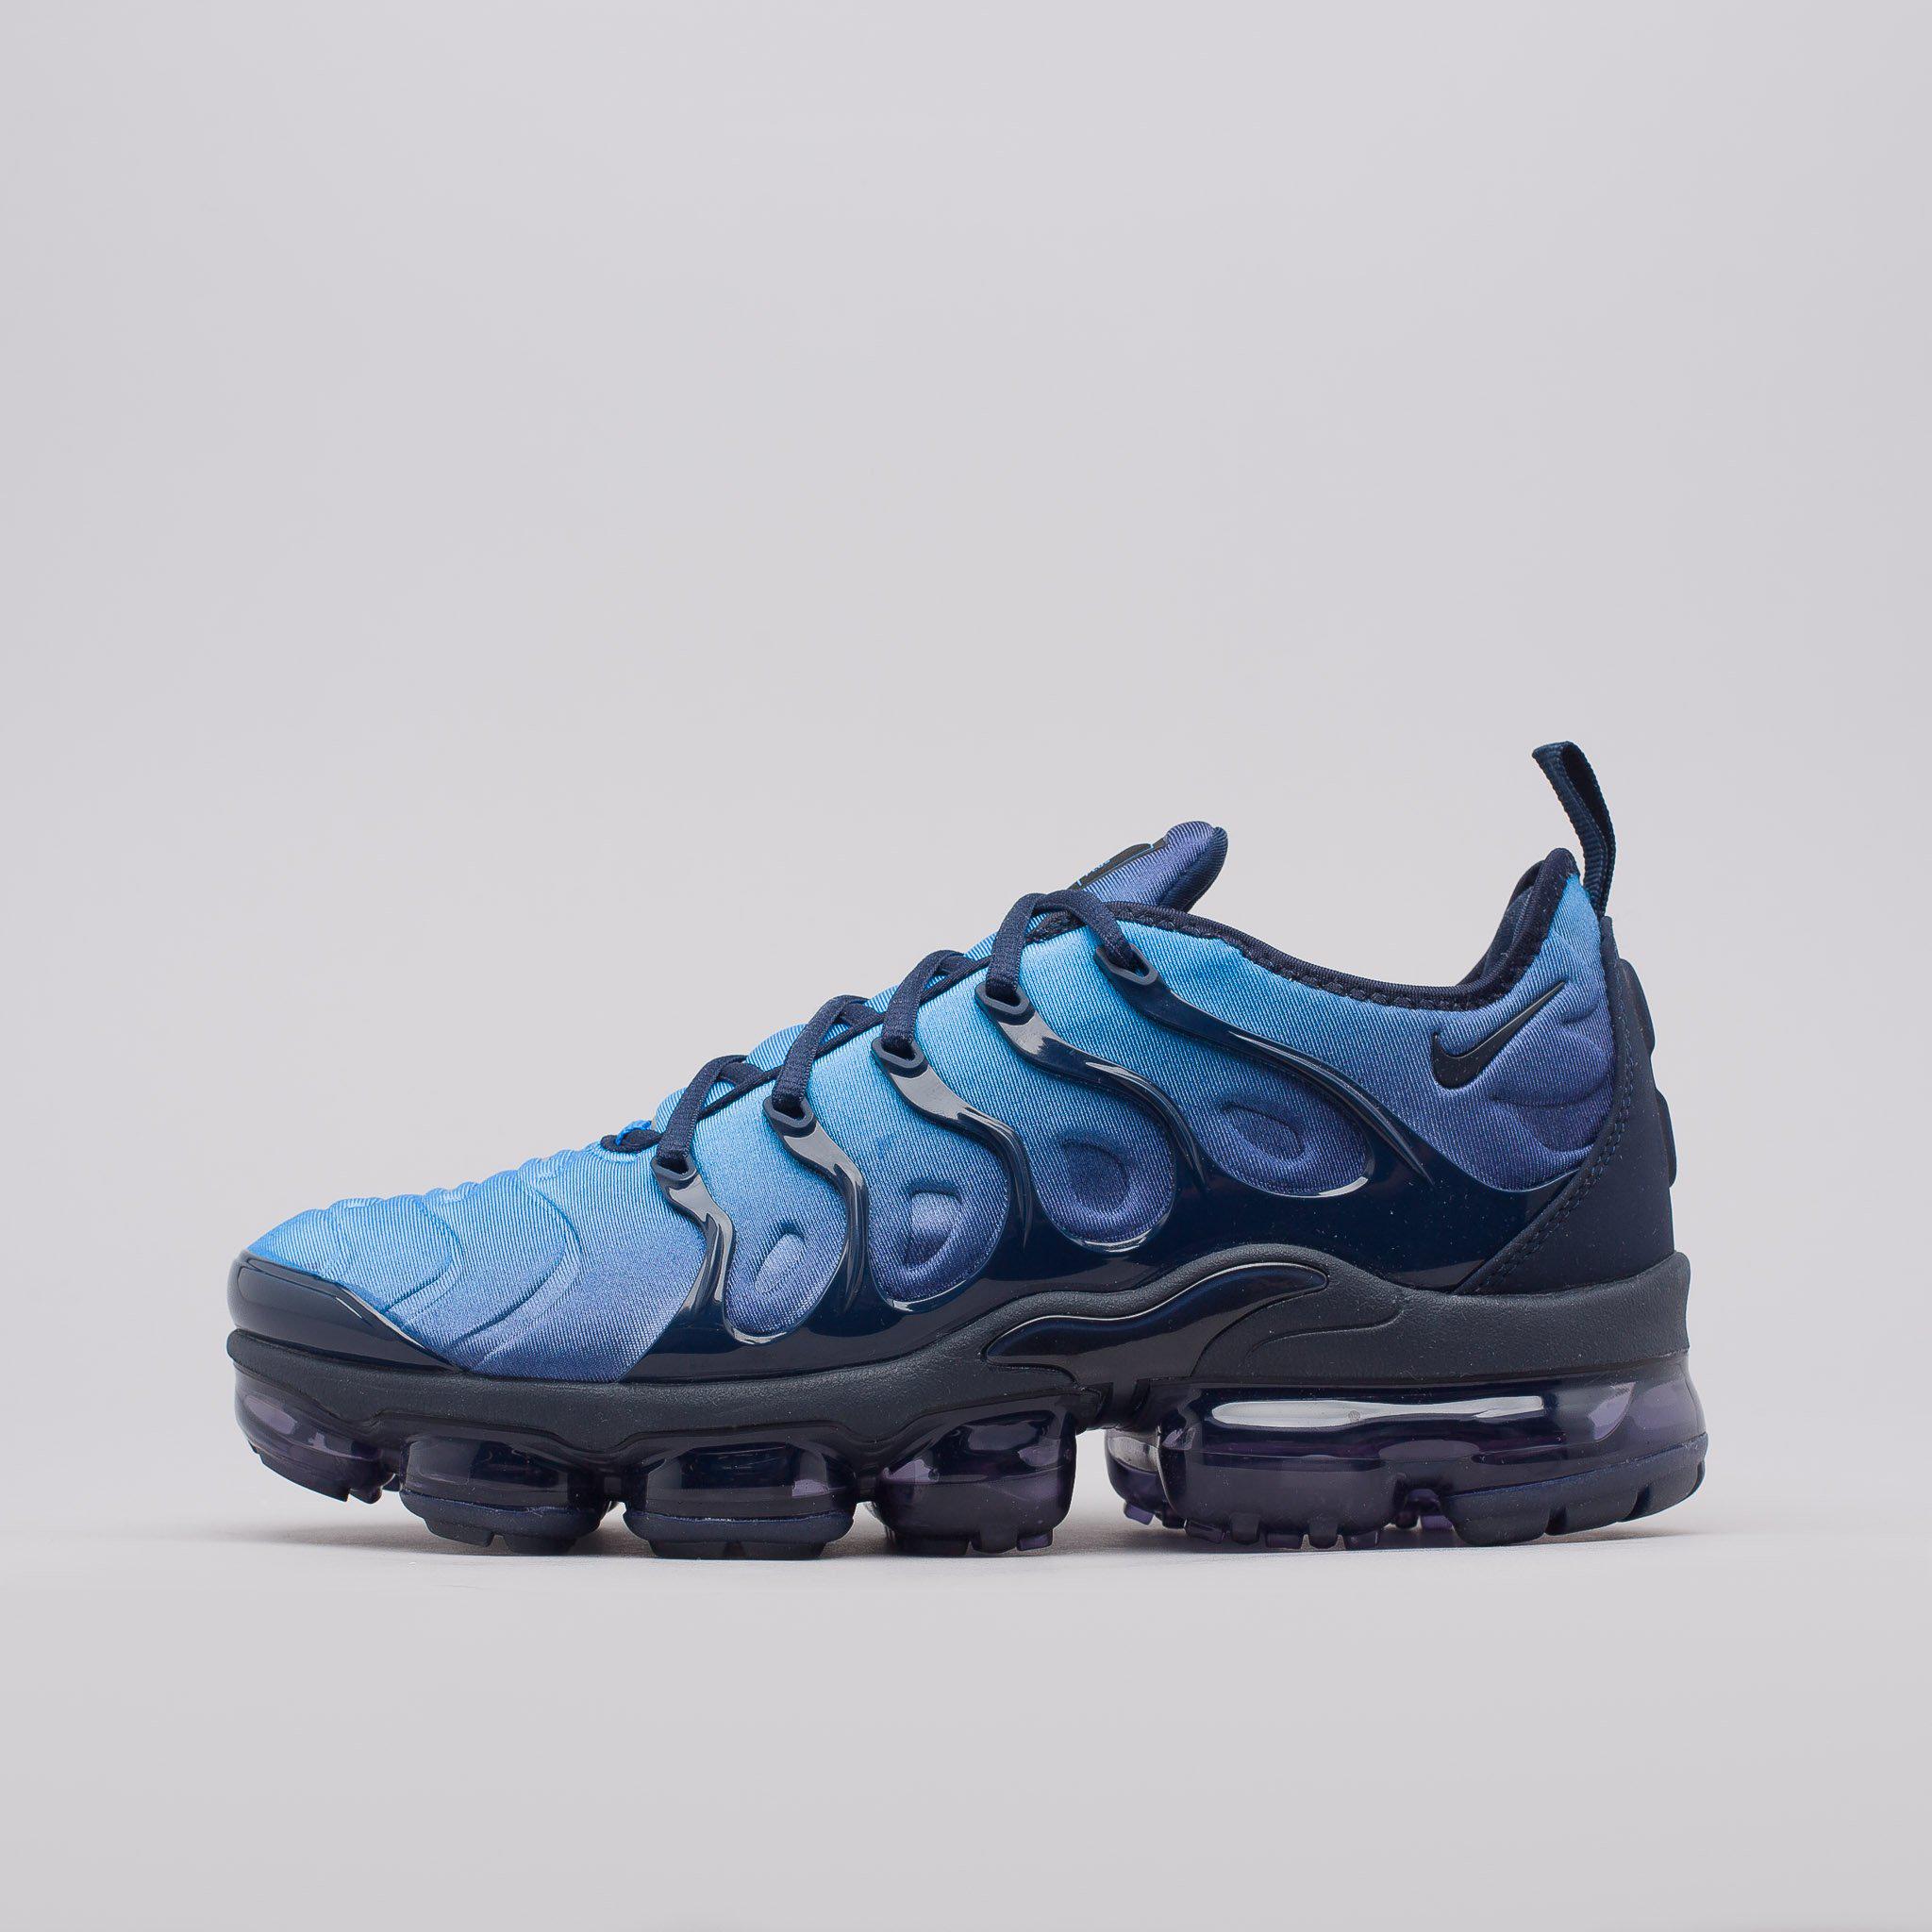 Lyst - Nike Air Vapormax Plus In Obsidian in Blue for Men